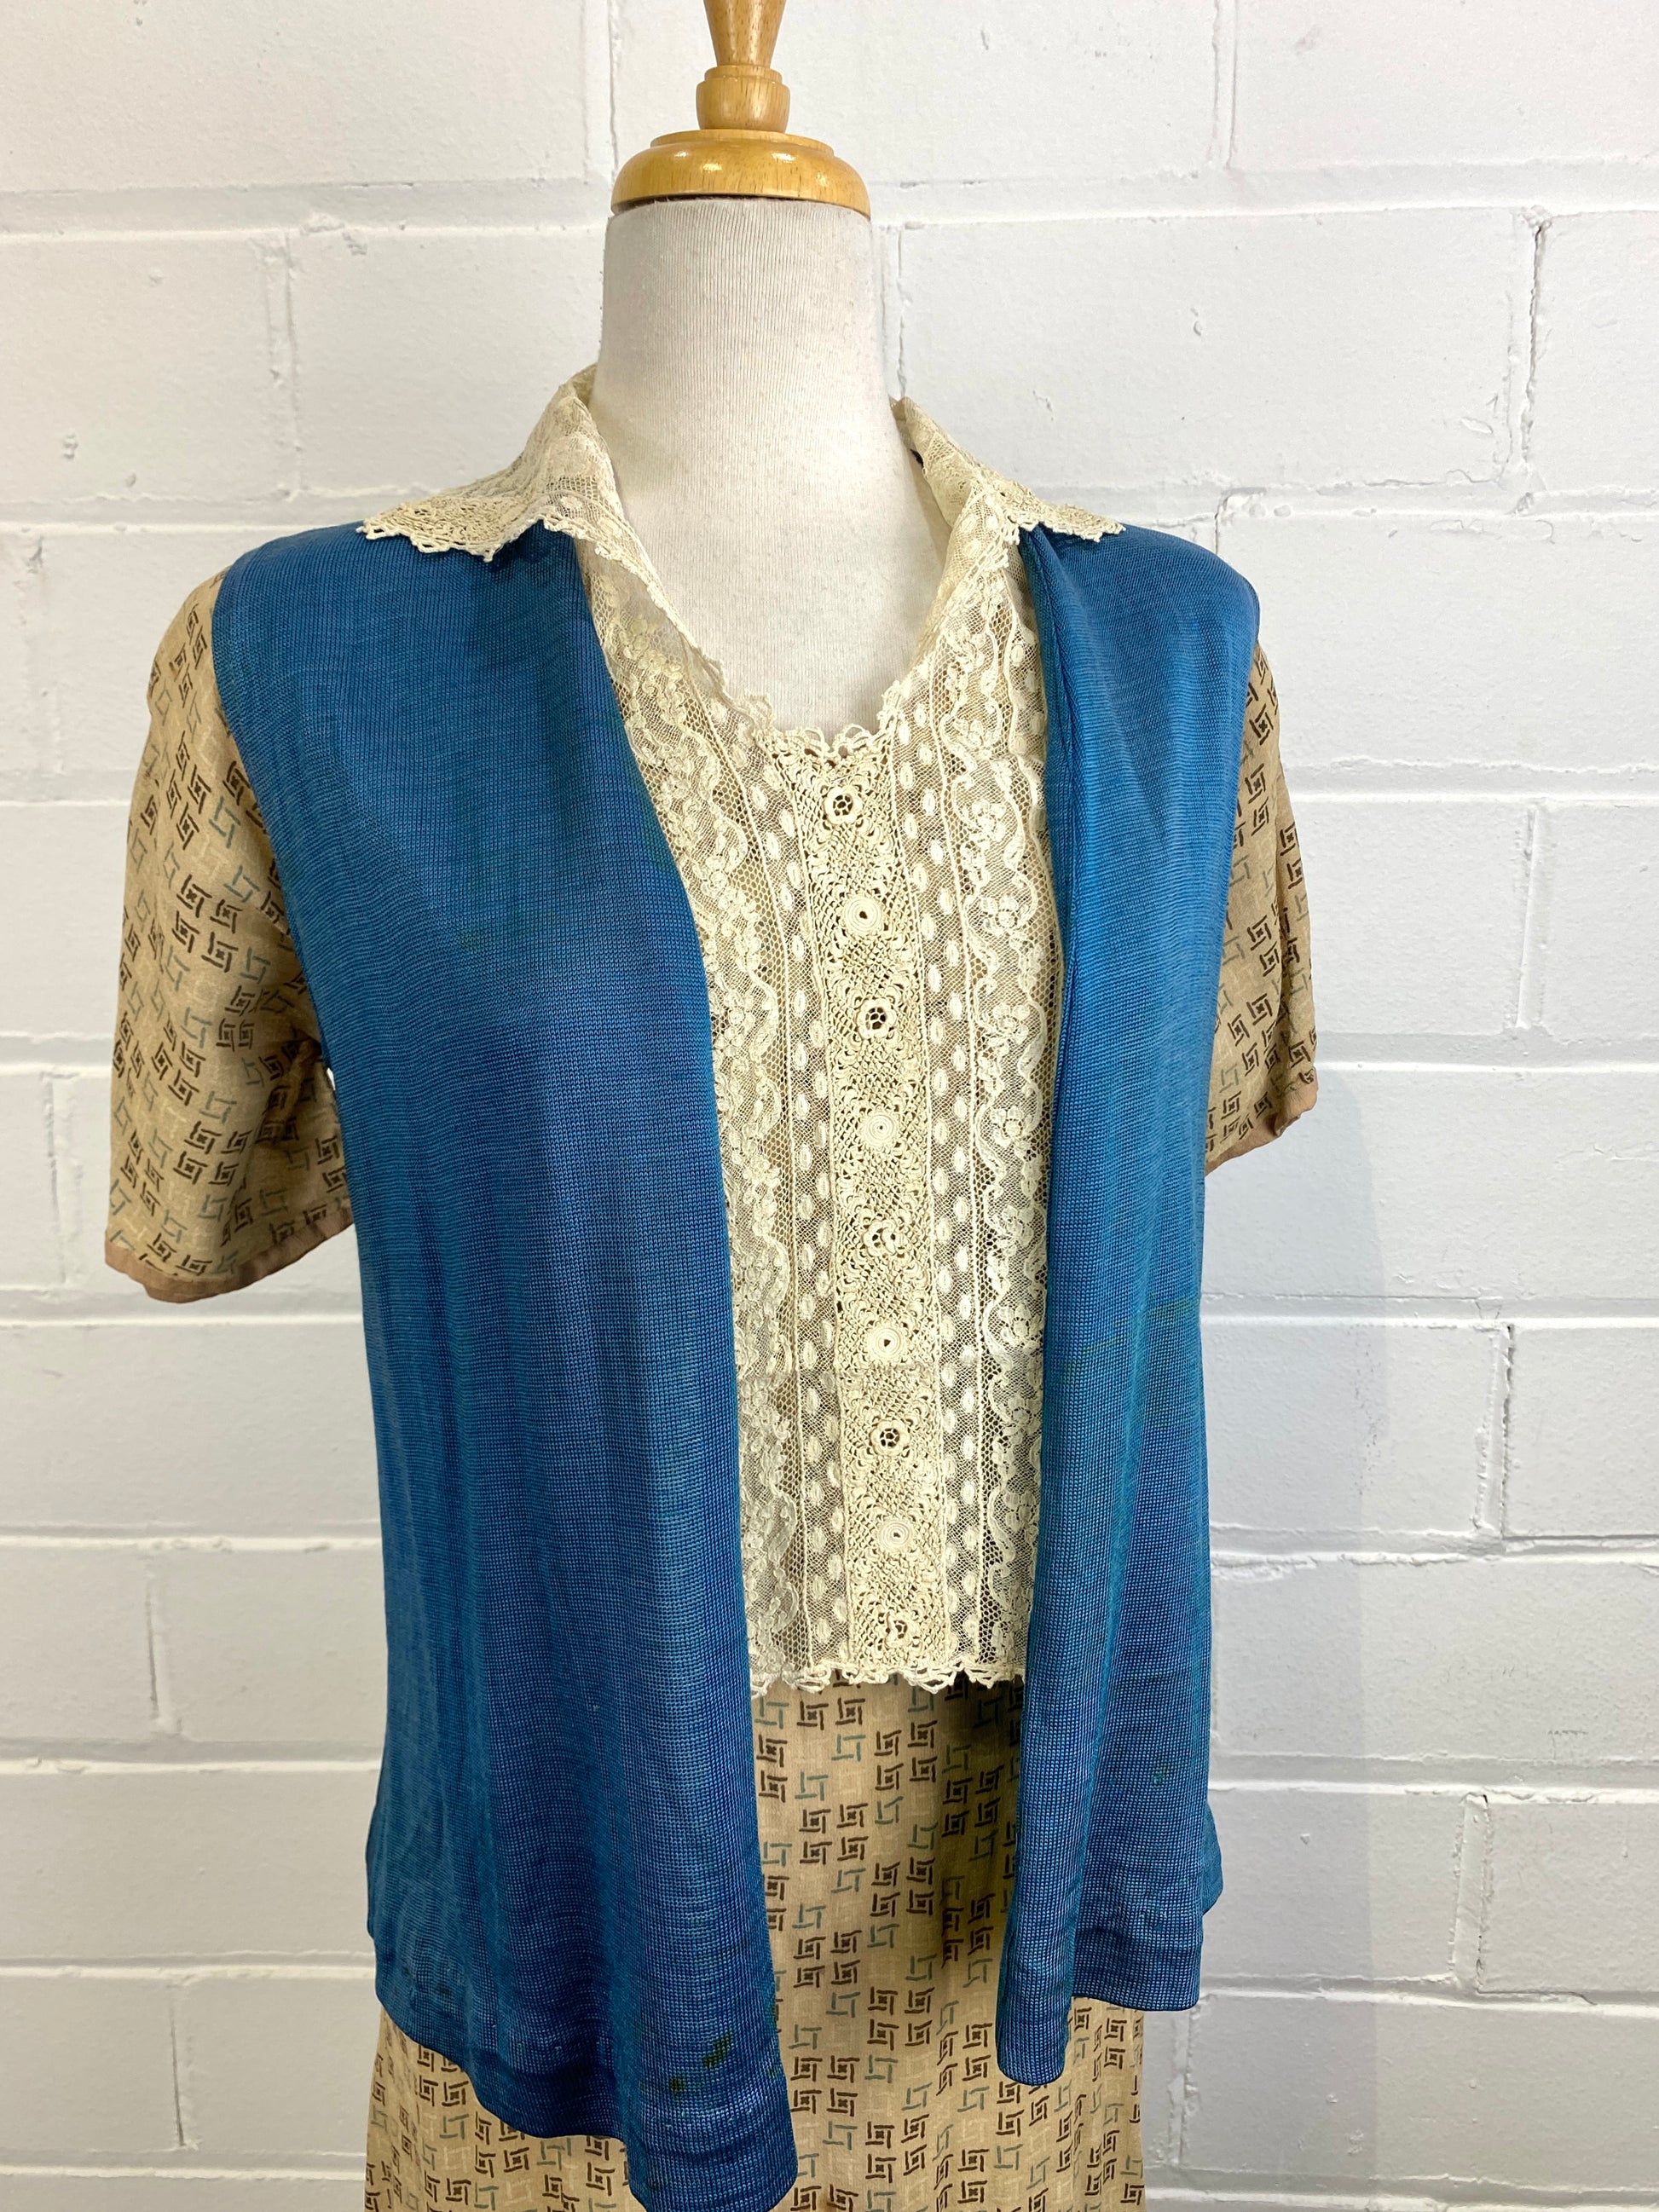 Vintage 1920s Crochet Lace Bib Collar